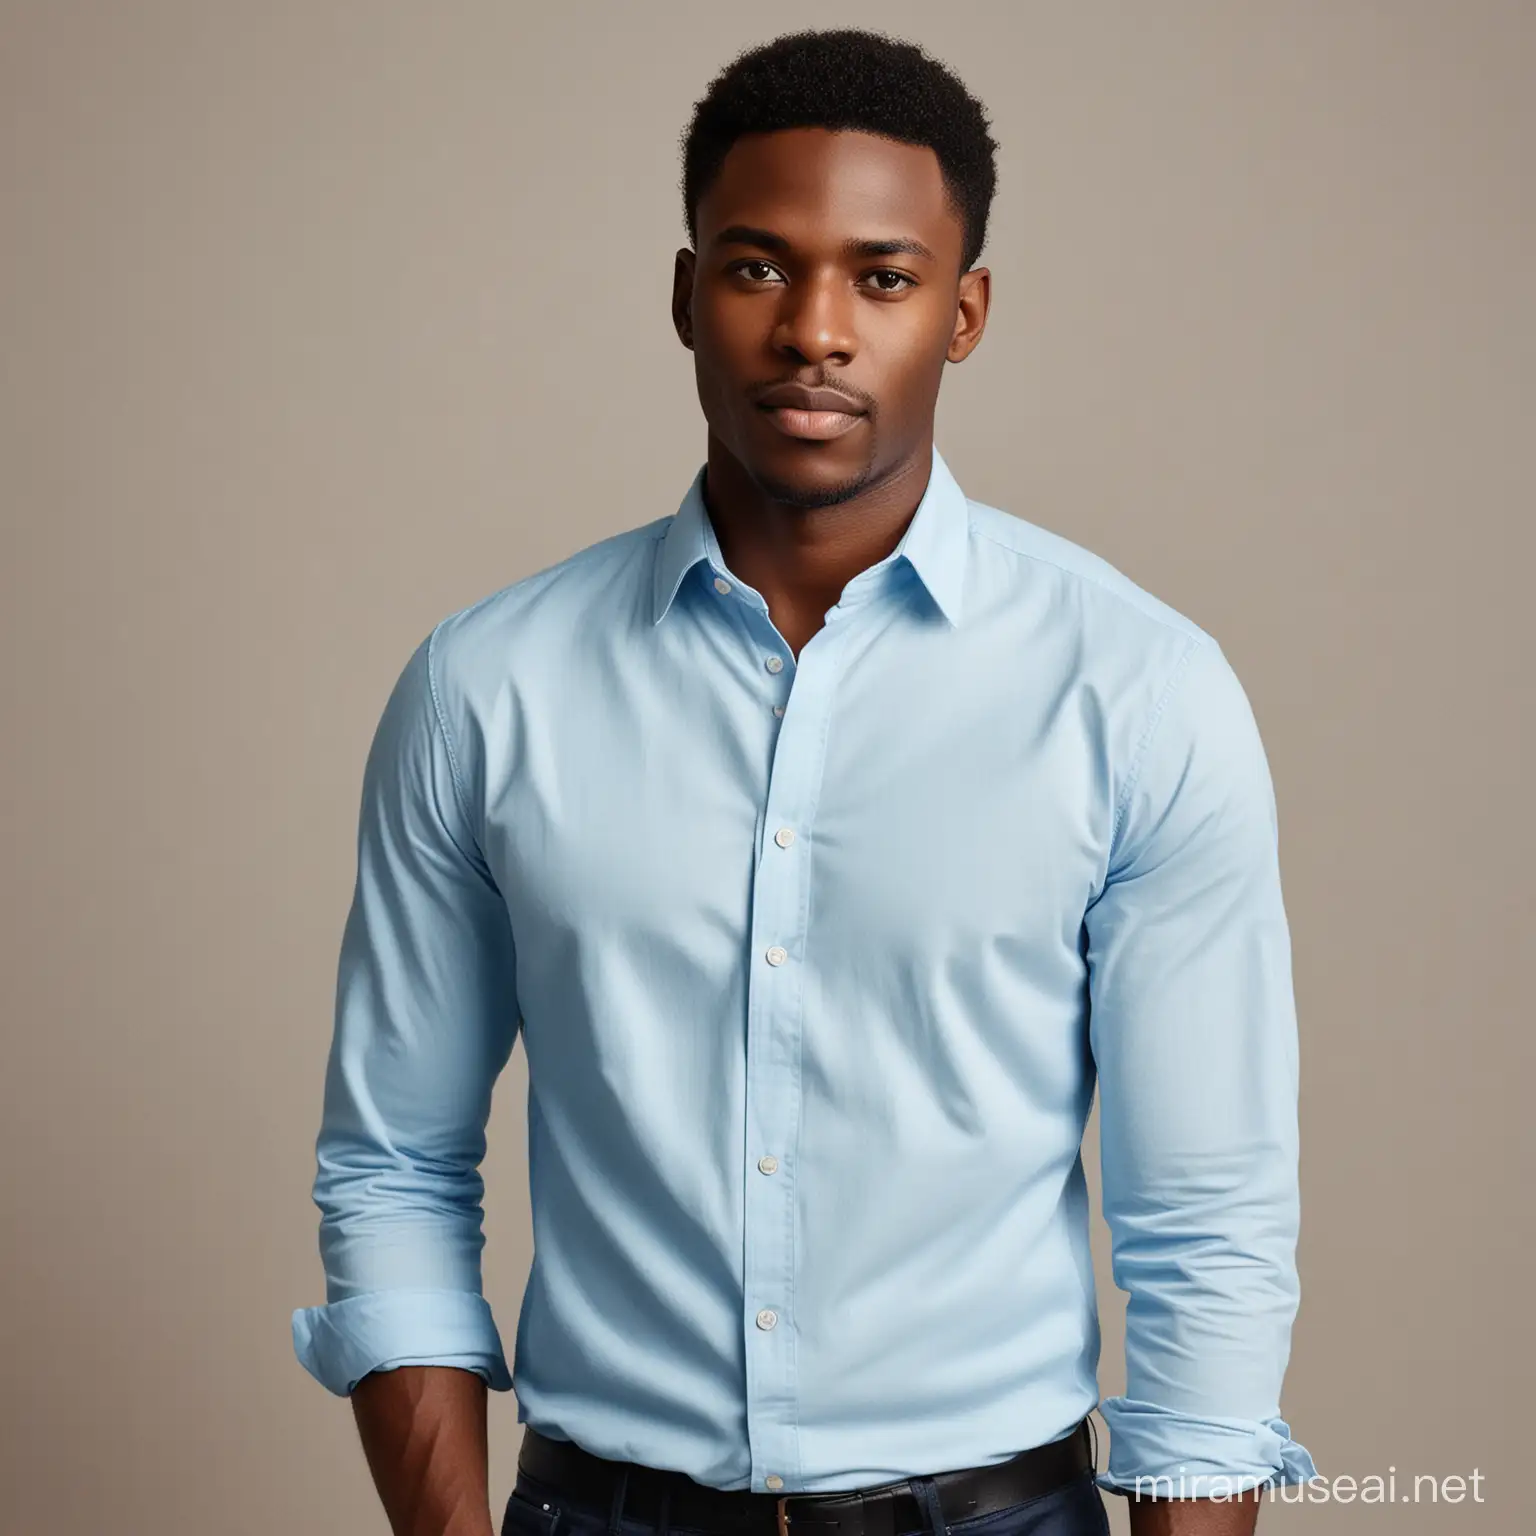 black man in light blue shirt